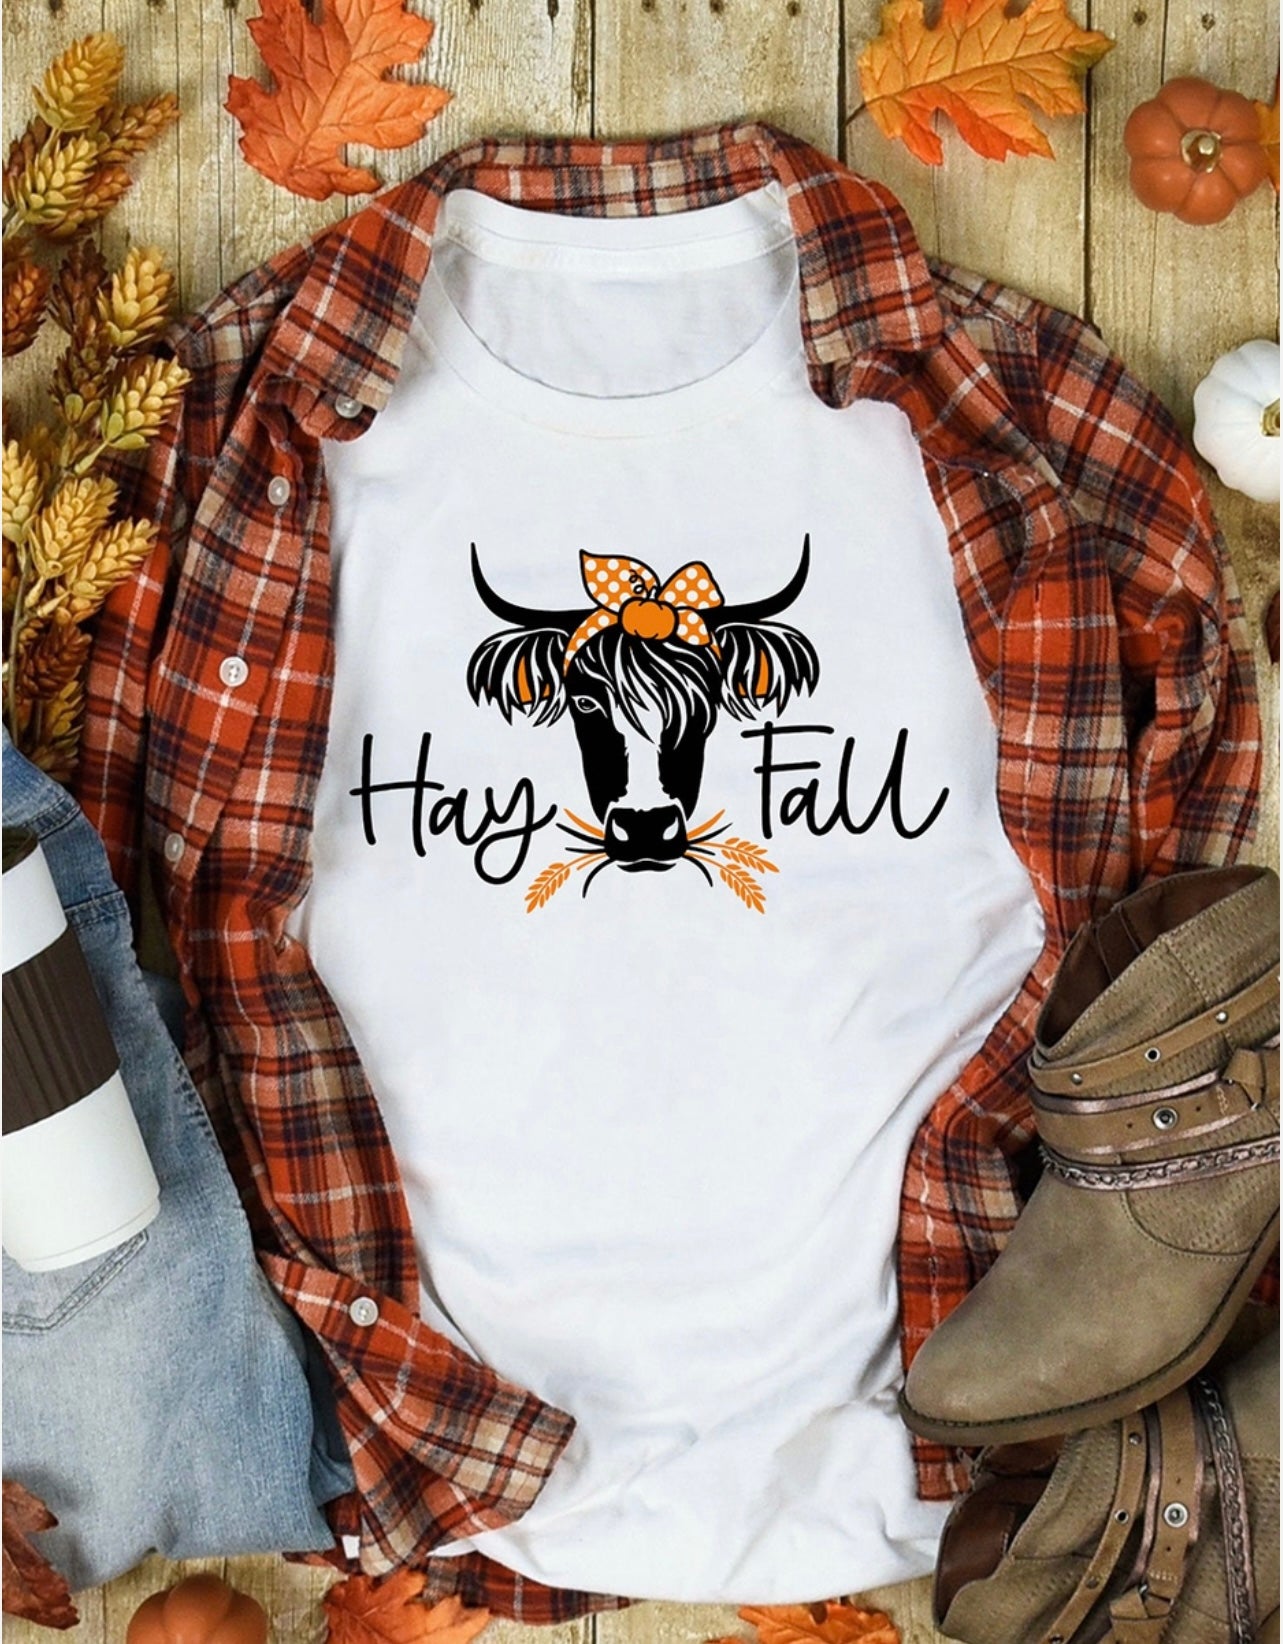 Hay Fall Cow Head Graphic Tee - Regular & Plus